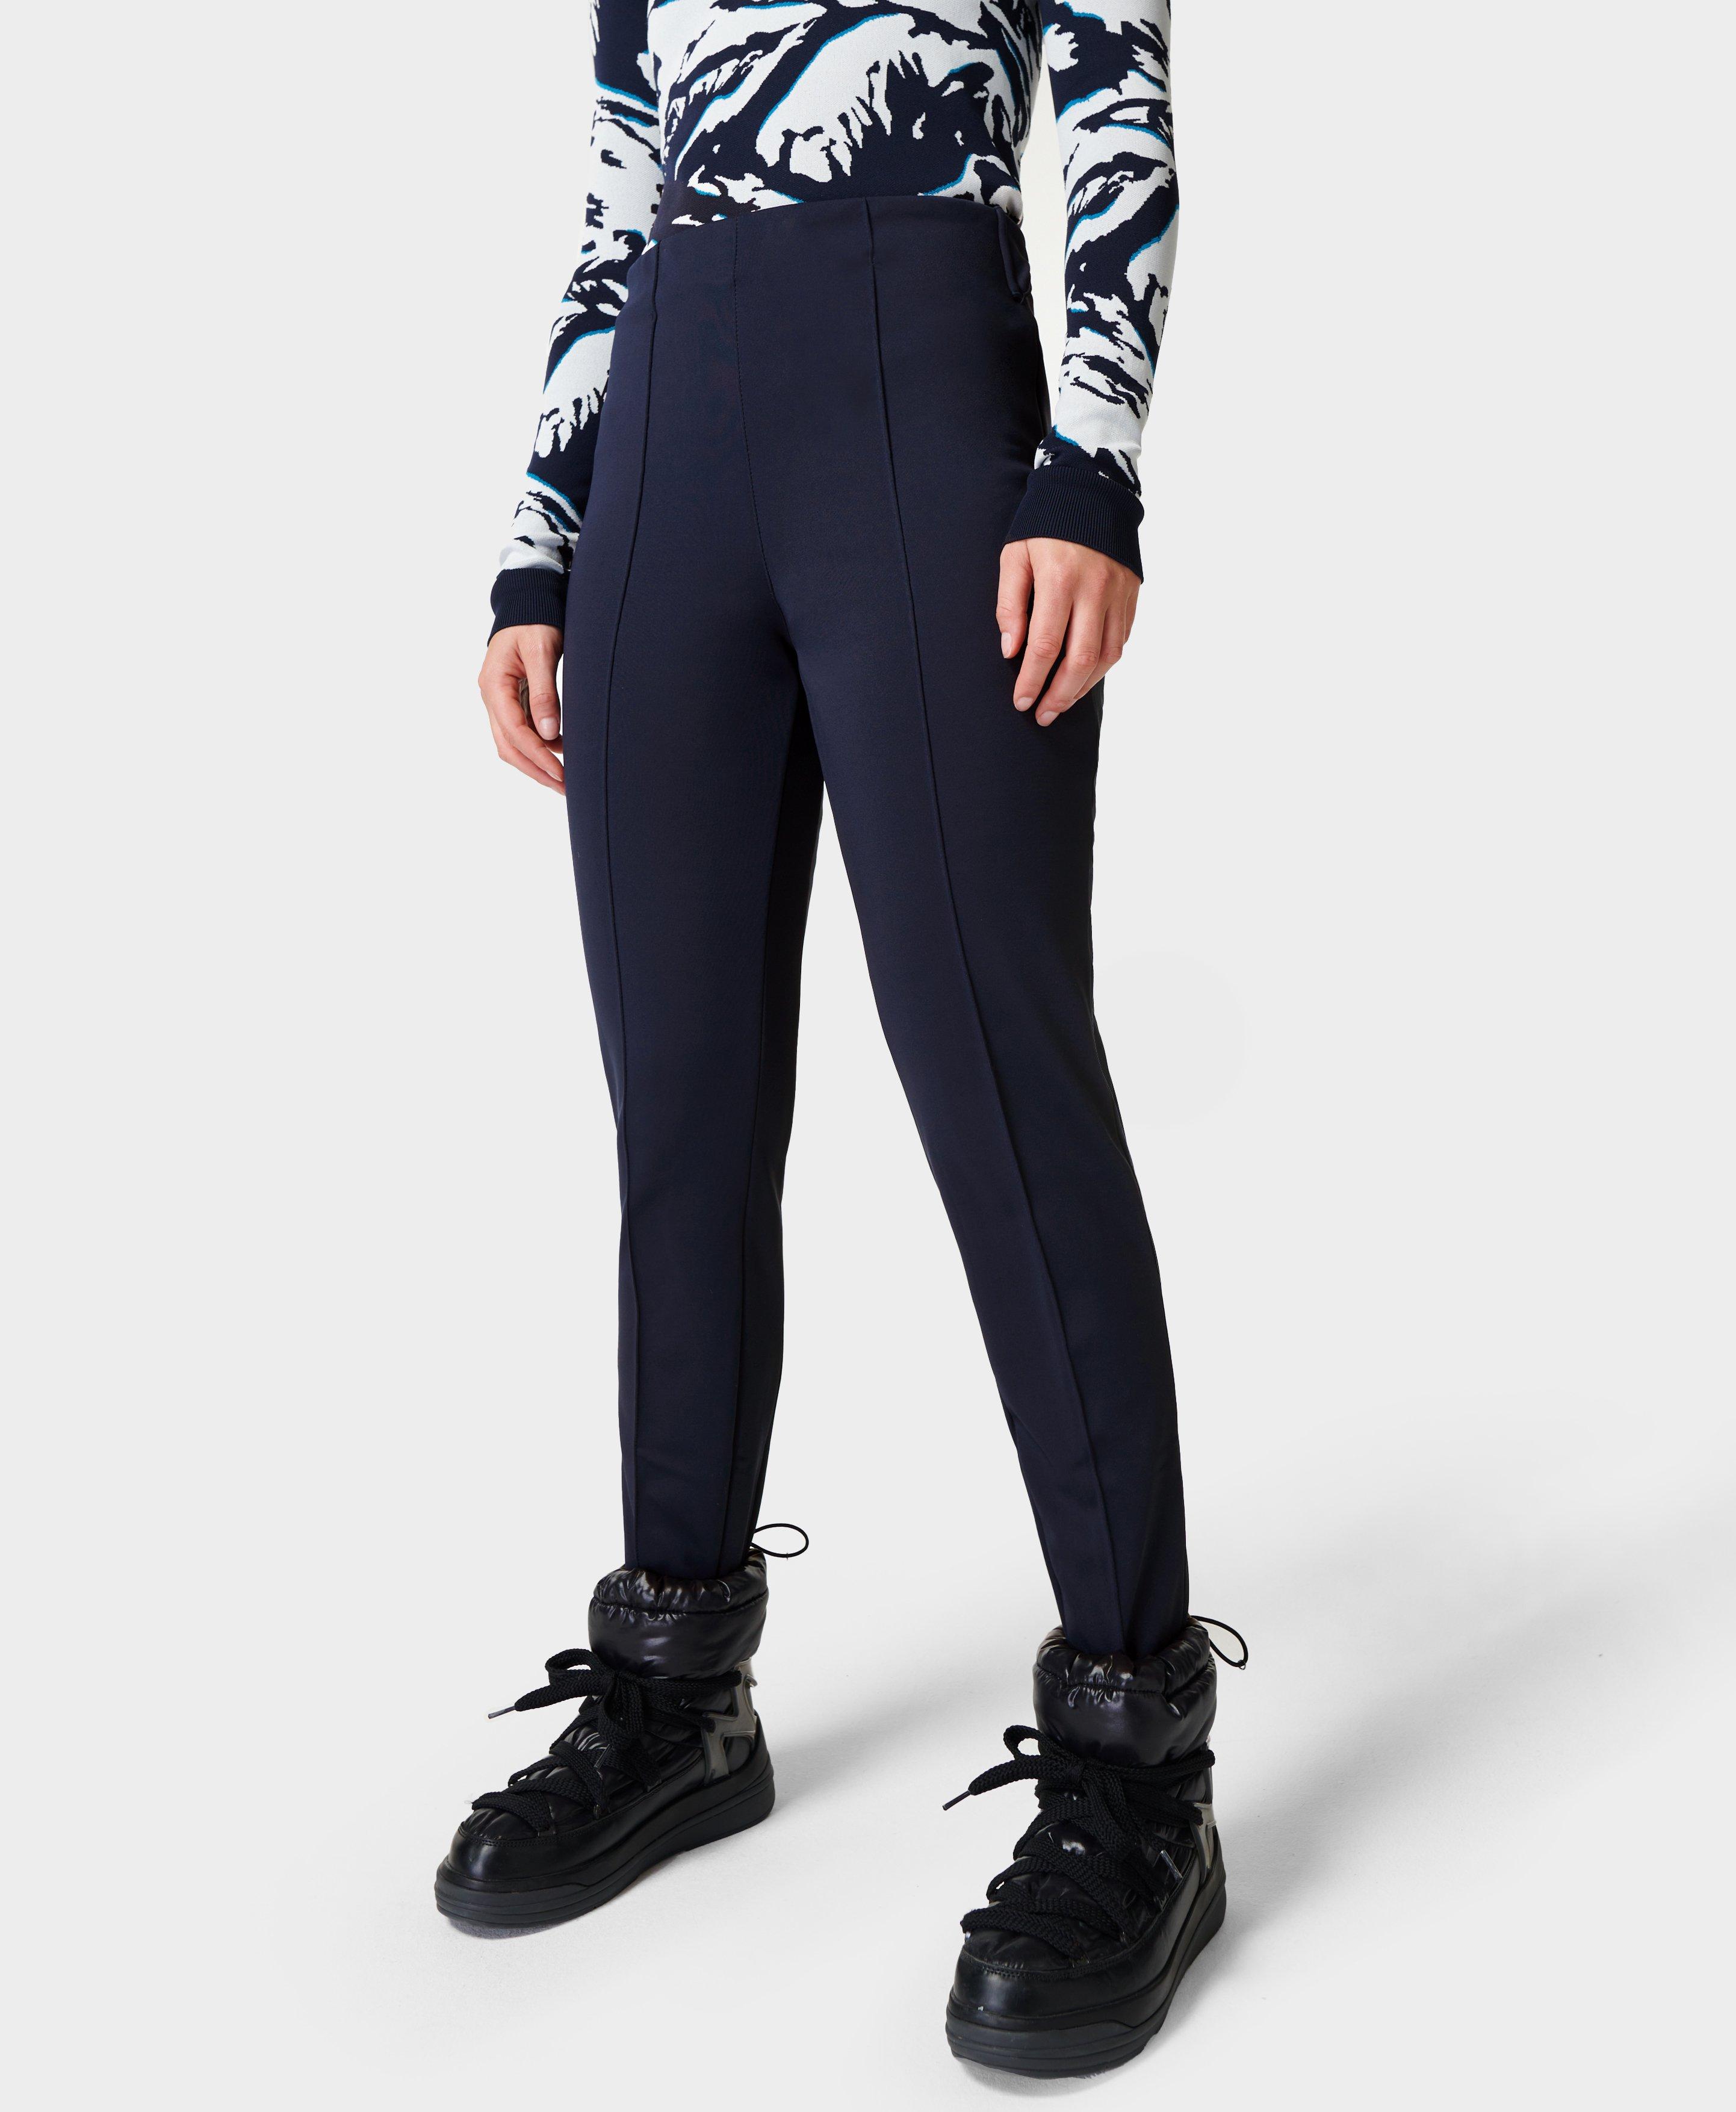  Stirrup Ski Pants - Women's Skiing Clothing / Ski